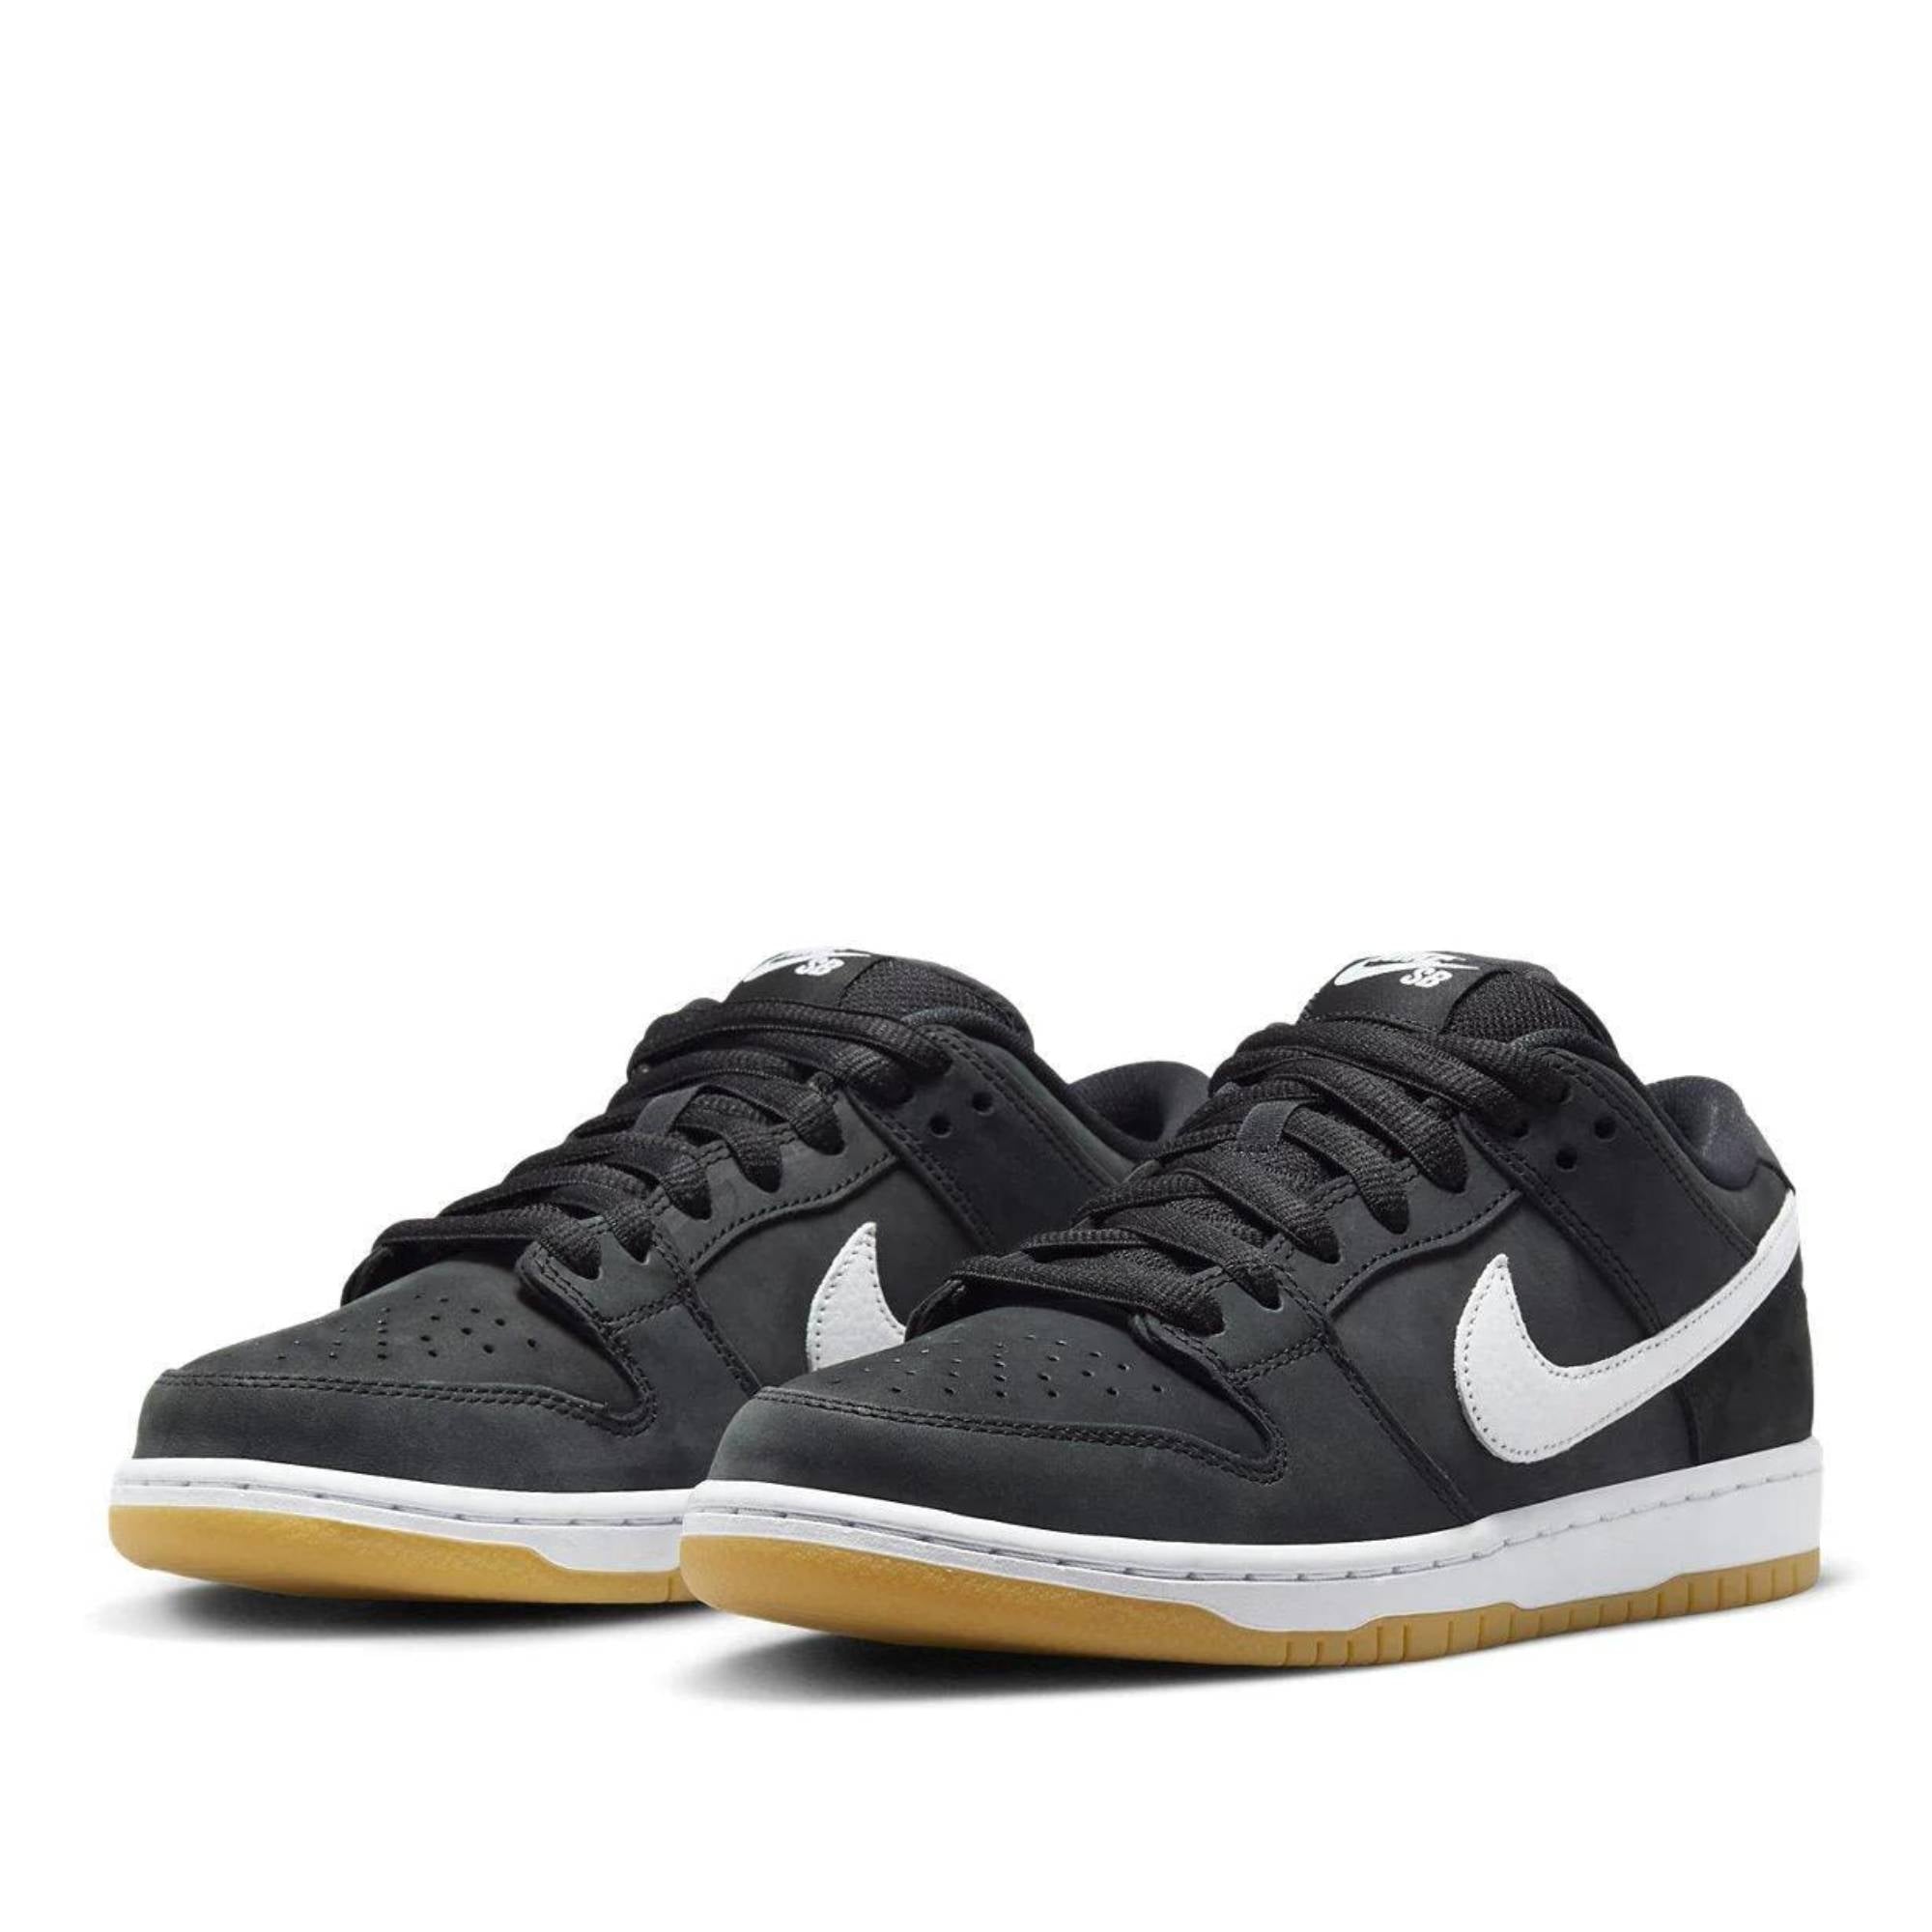 Nike Sb Dunk Low ’Black Gum’ M Us 6 / W 7.5 Sneakers